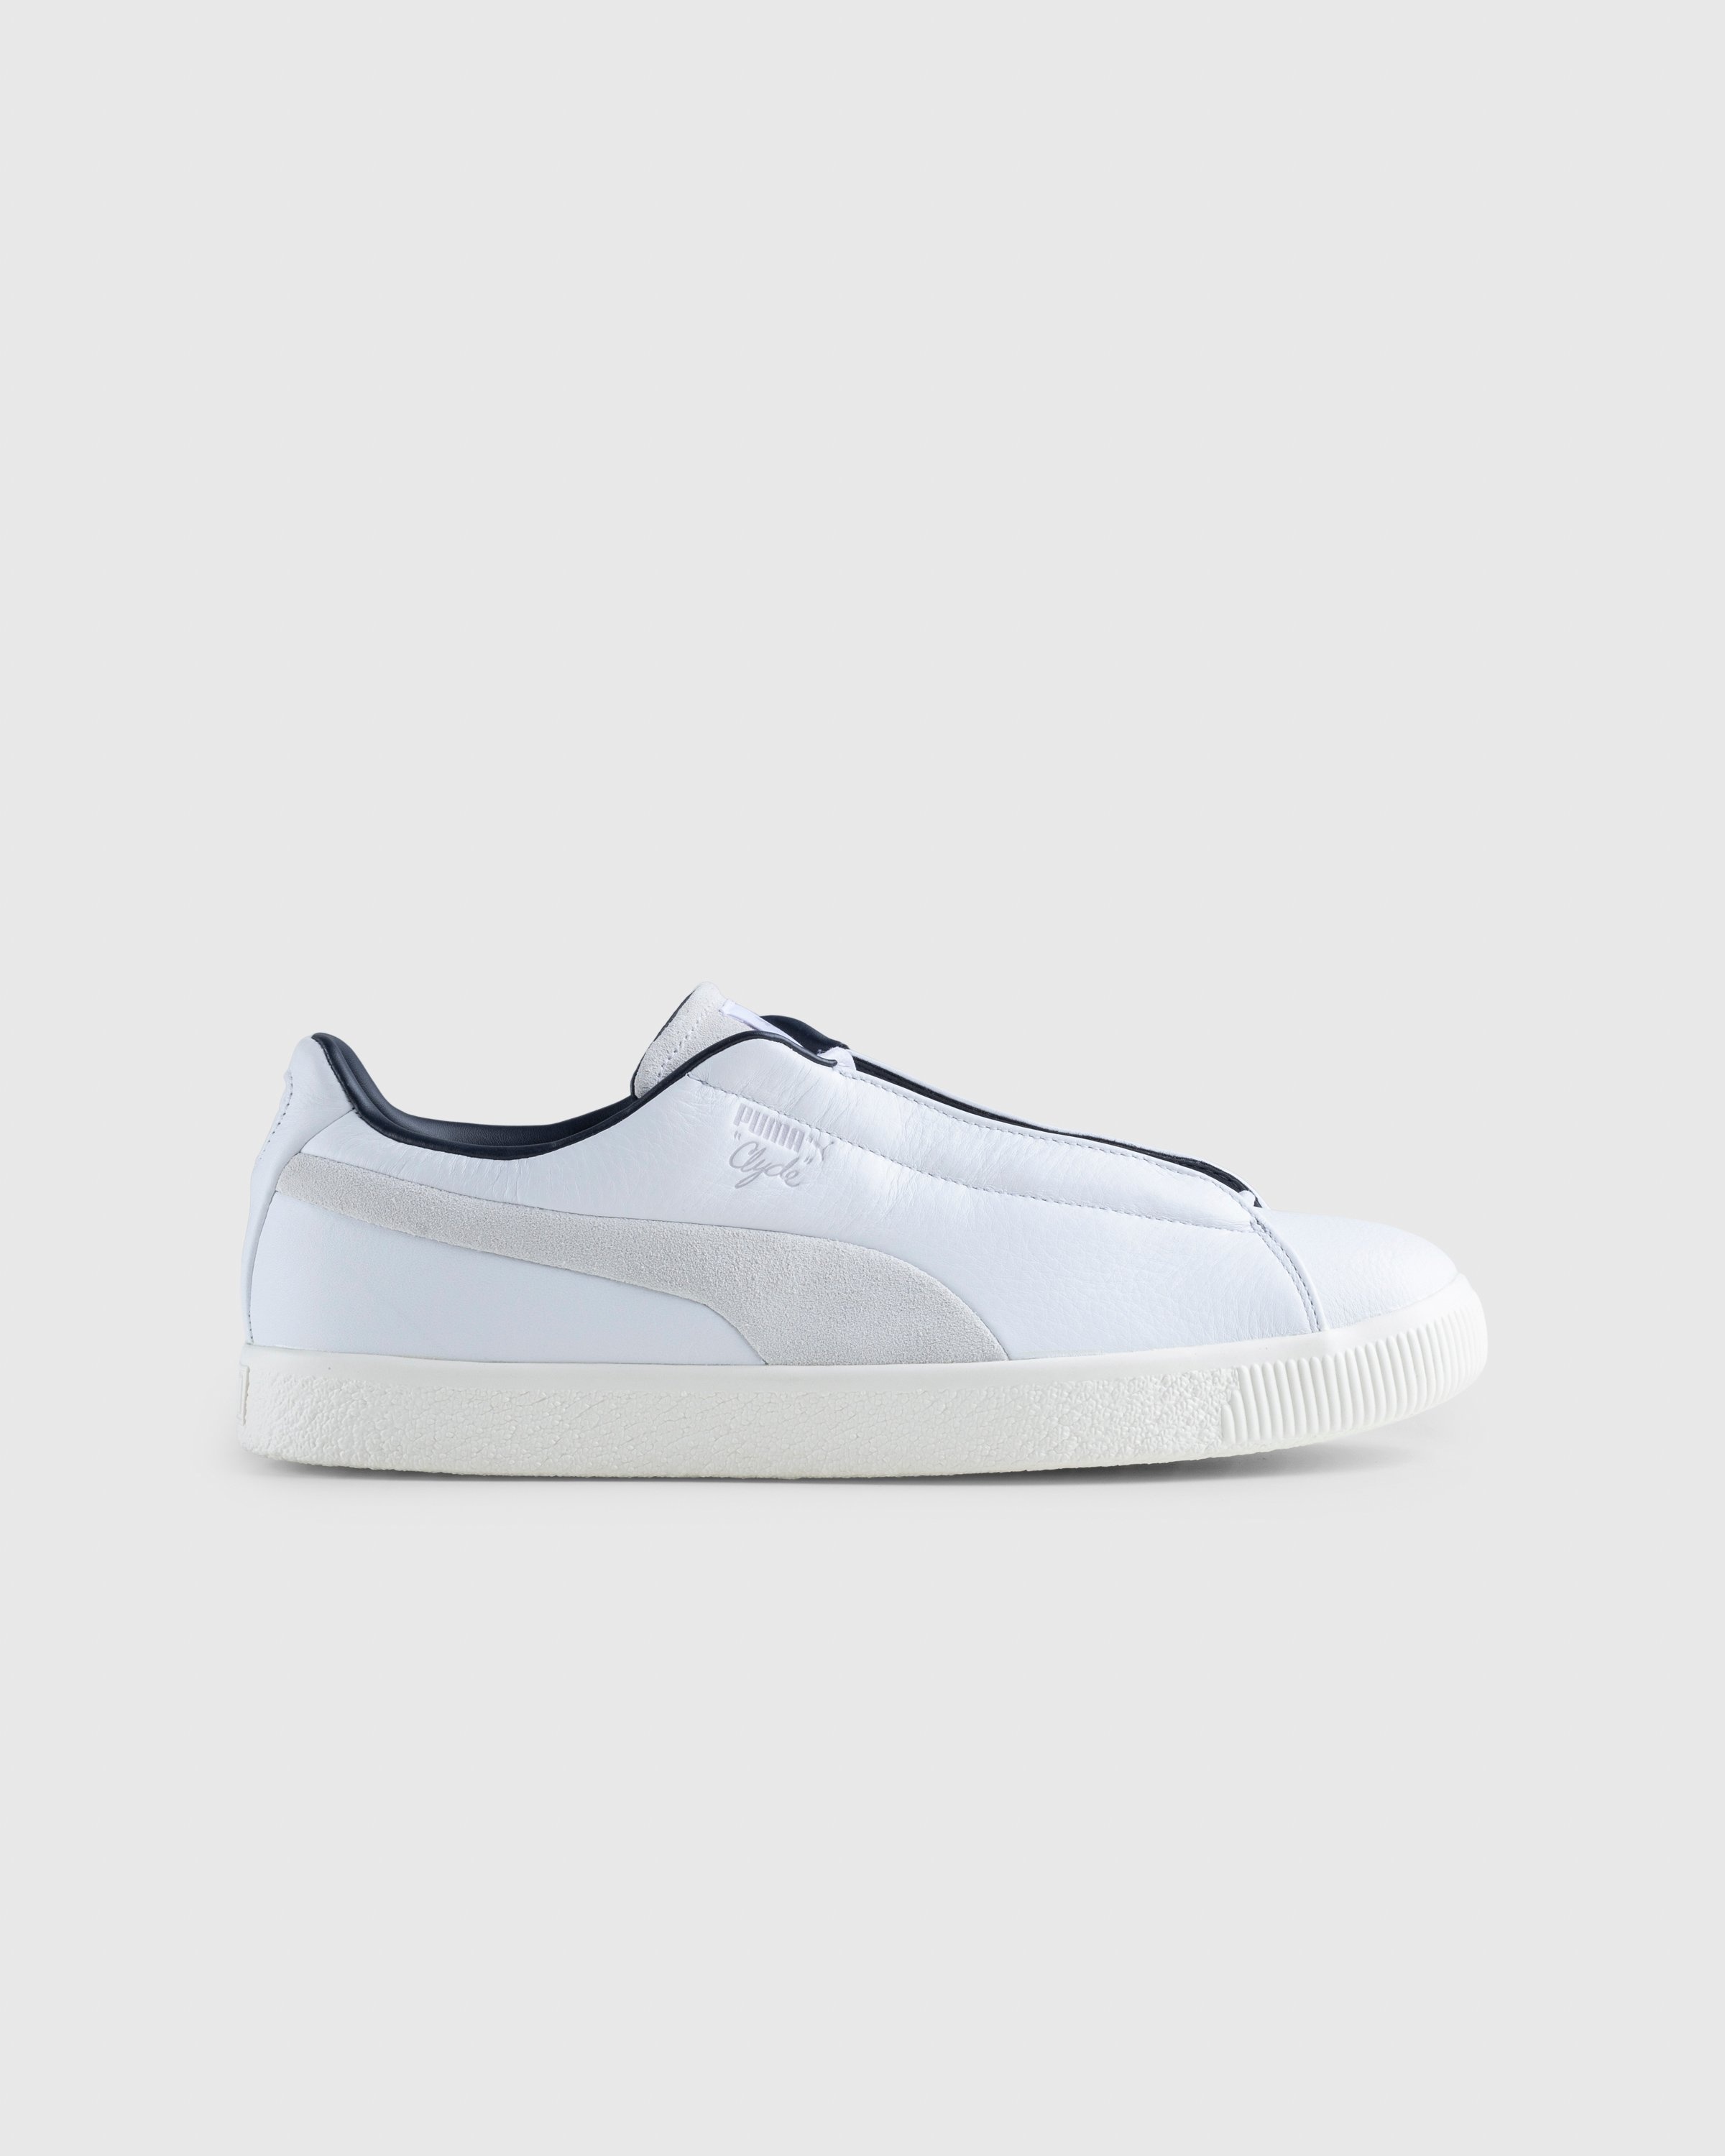 Puma x Nanamica – Clyde GORE-TEX White - Sneakers - White - Image 1